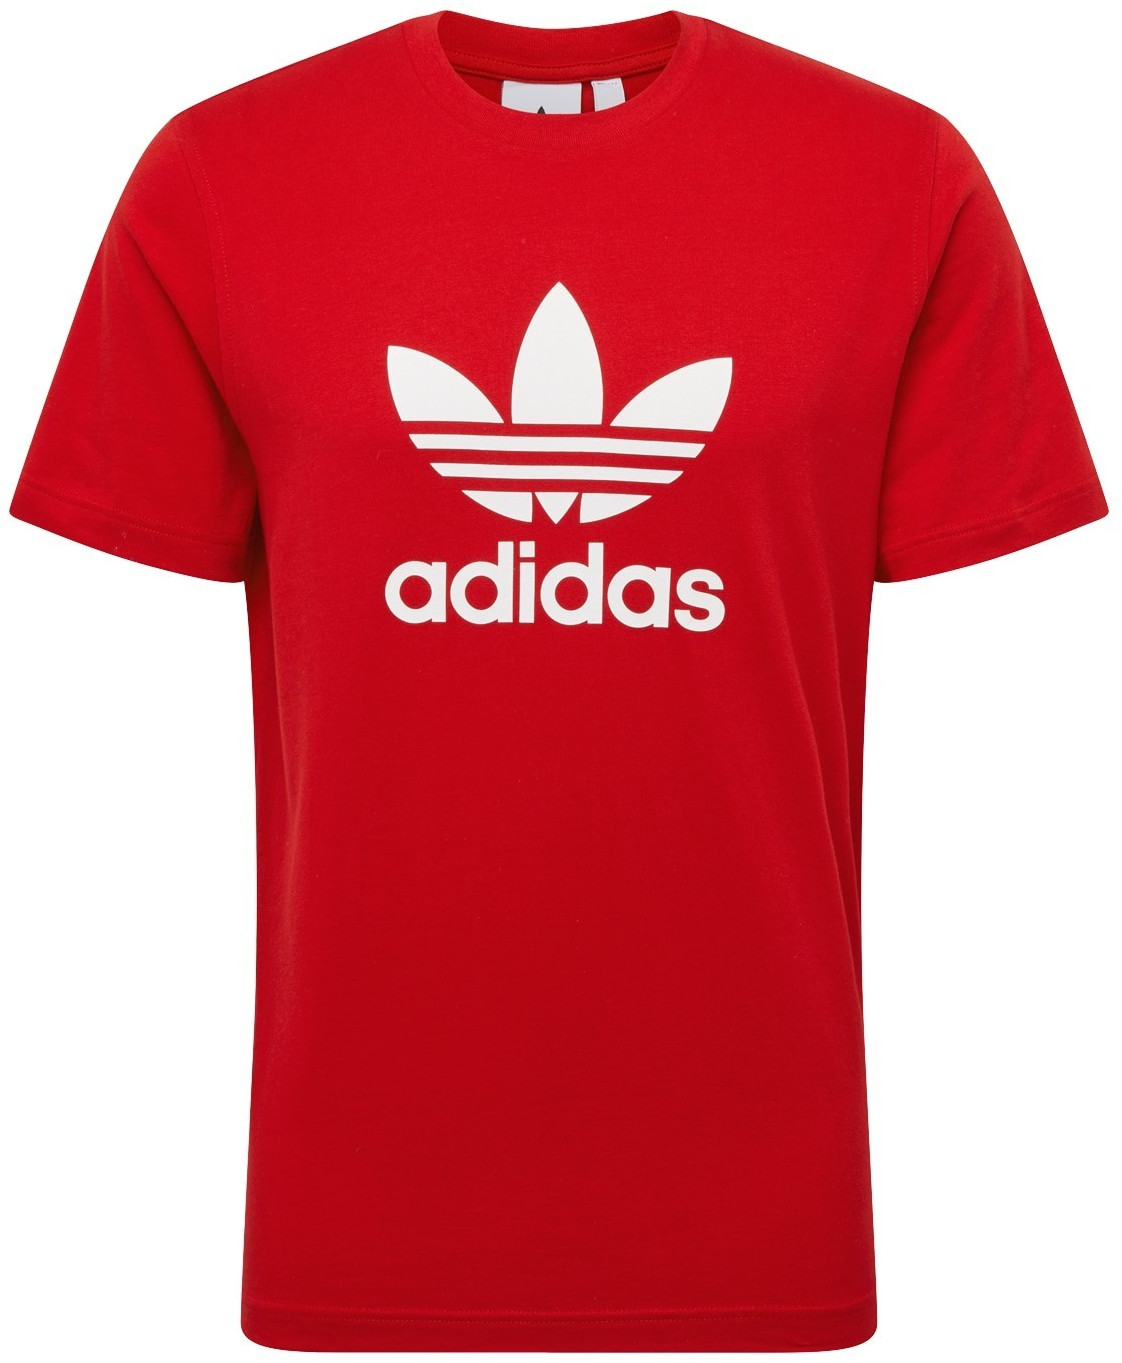 Adidas Originals Trefoil T-Shirt power red